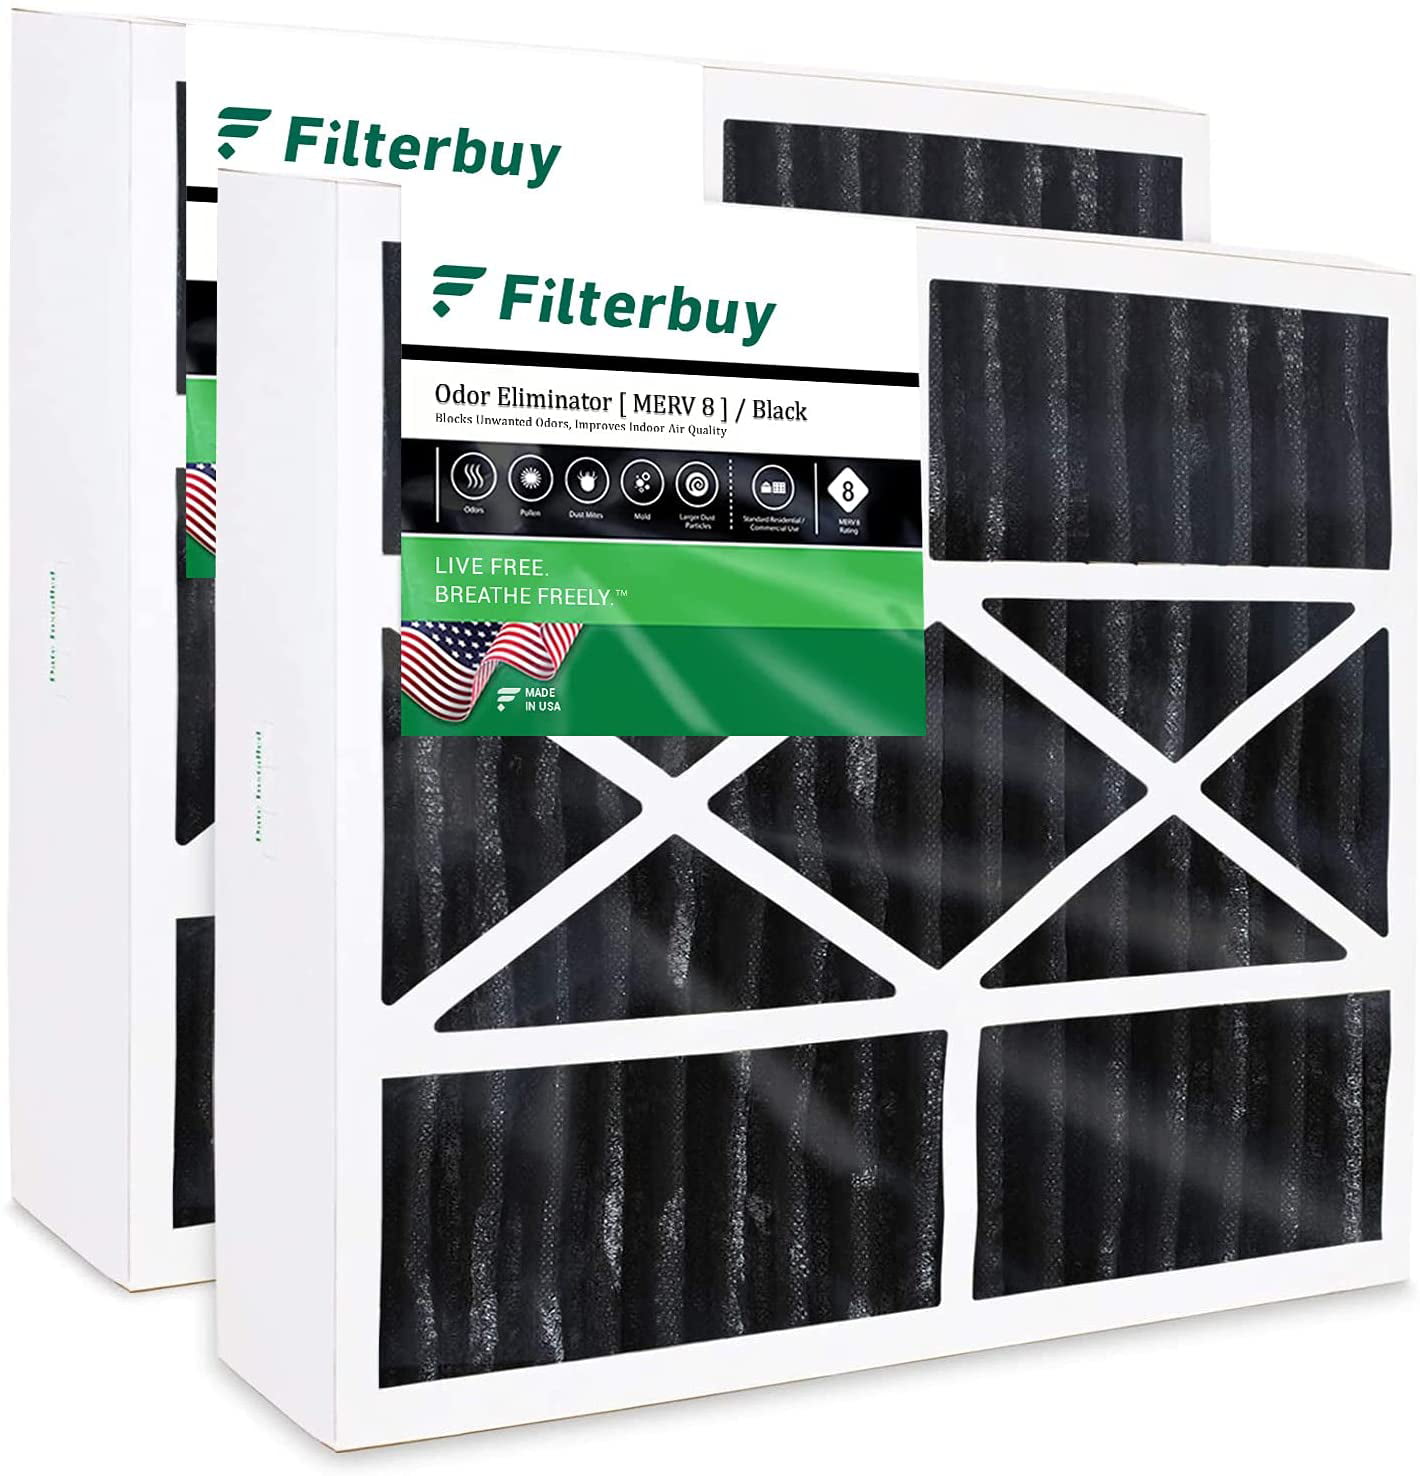 FilterBuy Allergen Odor Eliminator 16x24x1 MERV 8 Pleated AC Furnace Air Filter 